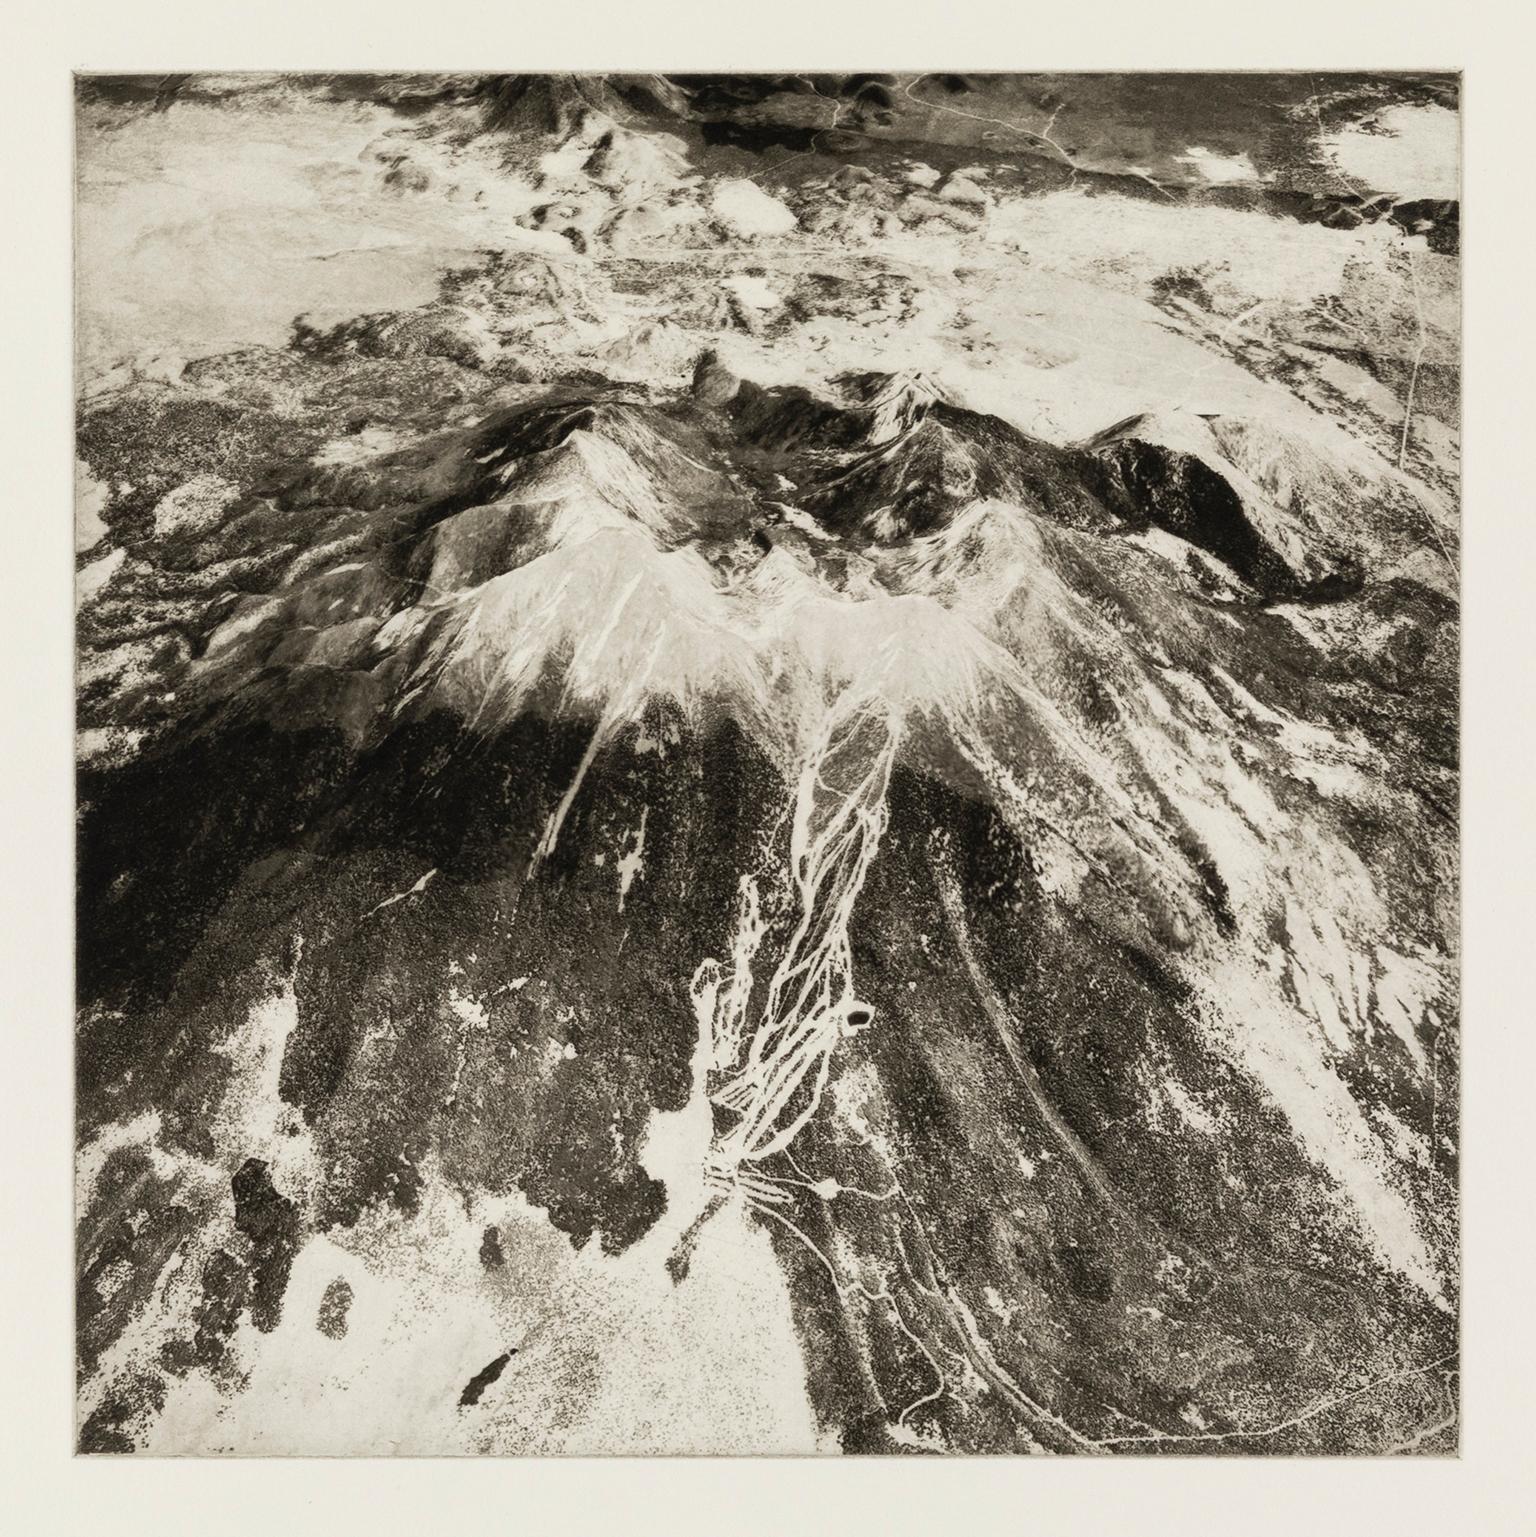 'Humphrey's Peak, Arizona' — from the series 'Axis Mundi', Contemporary - Print by Beth Ganz